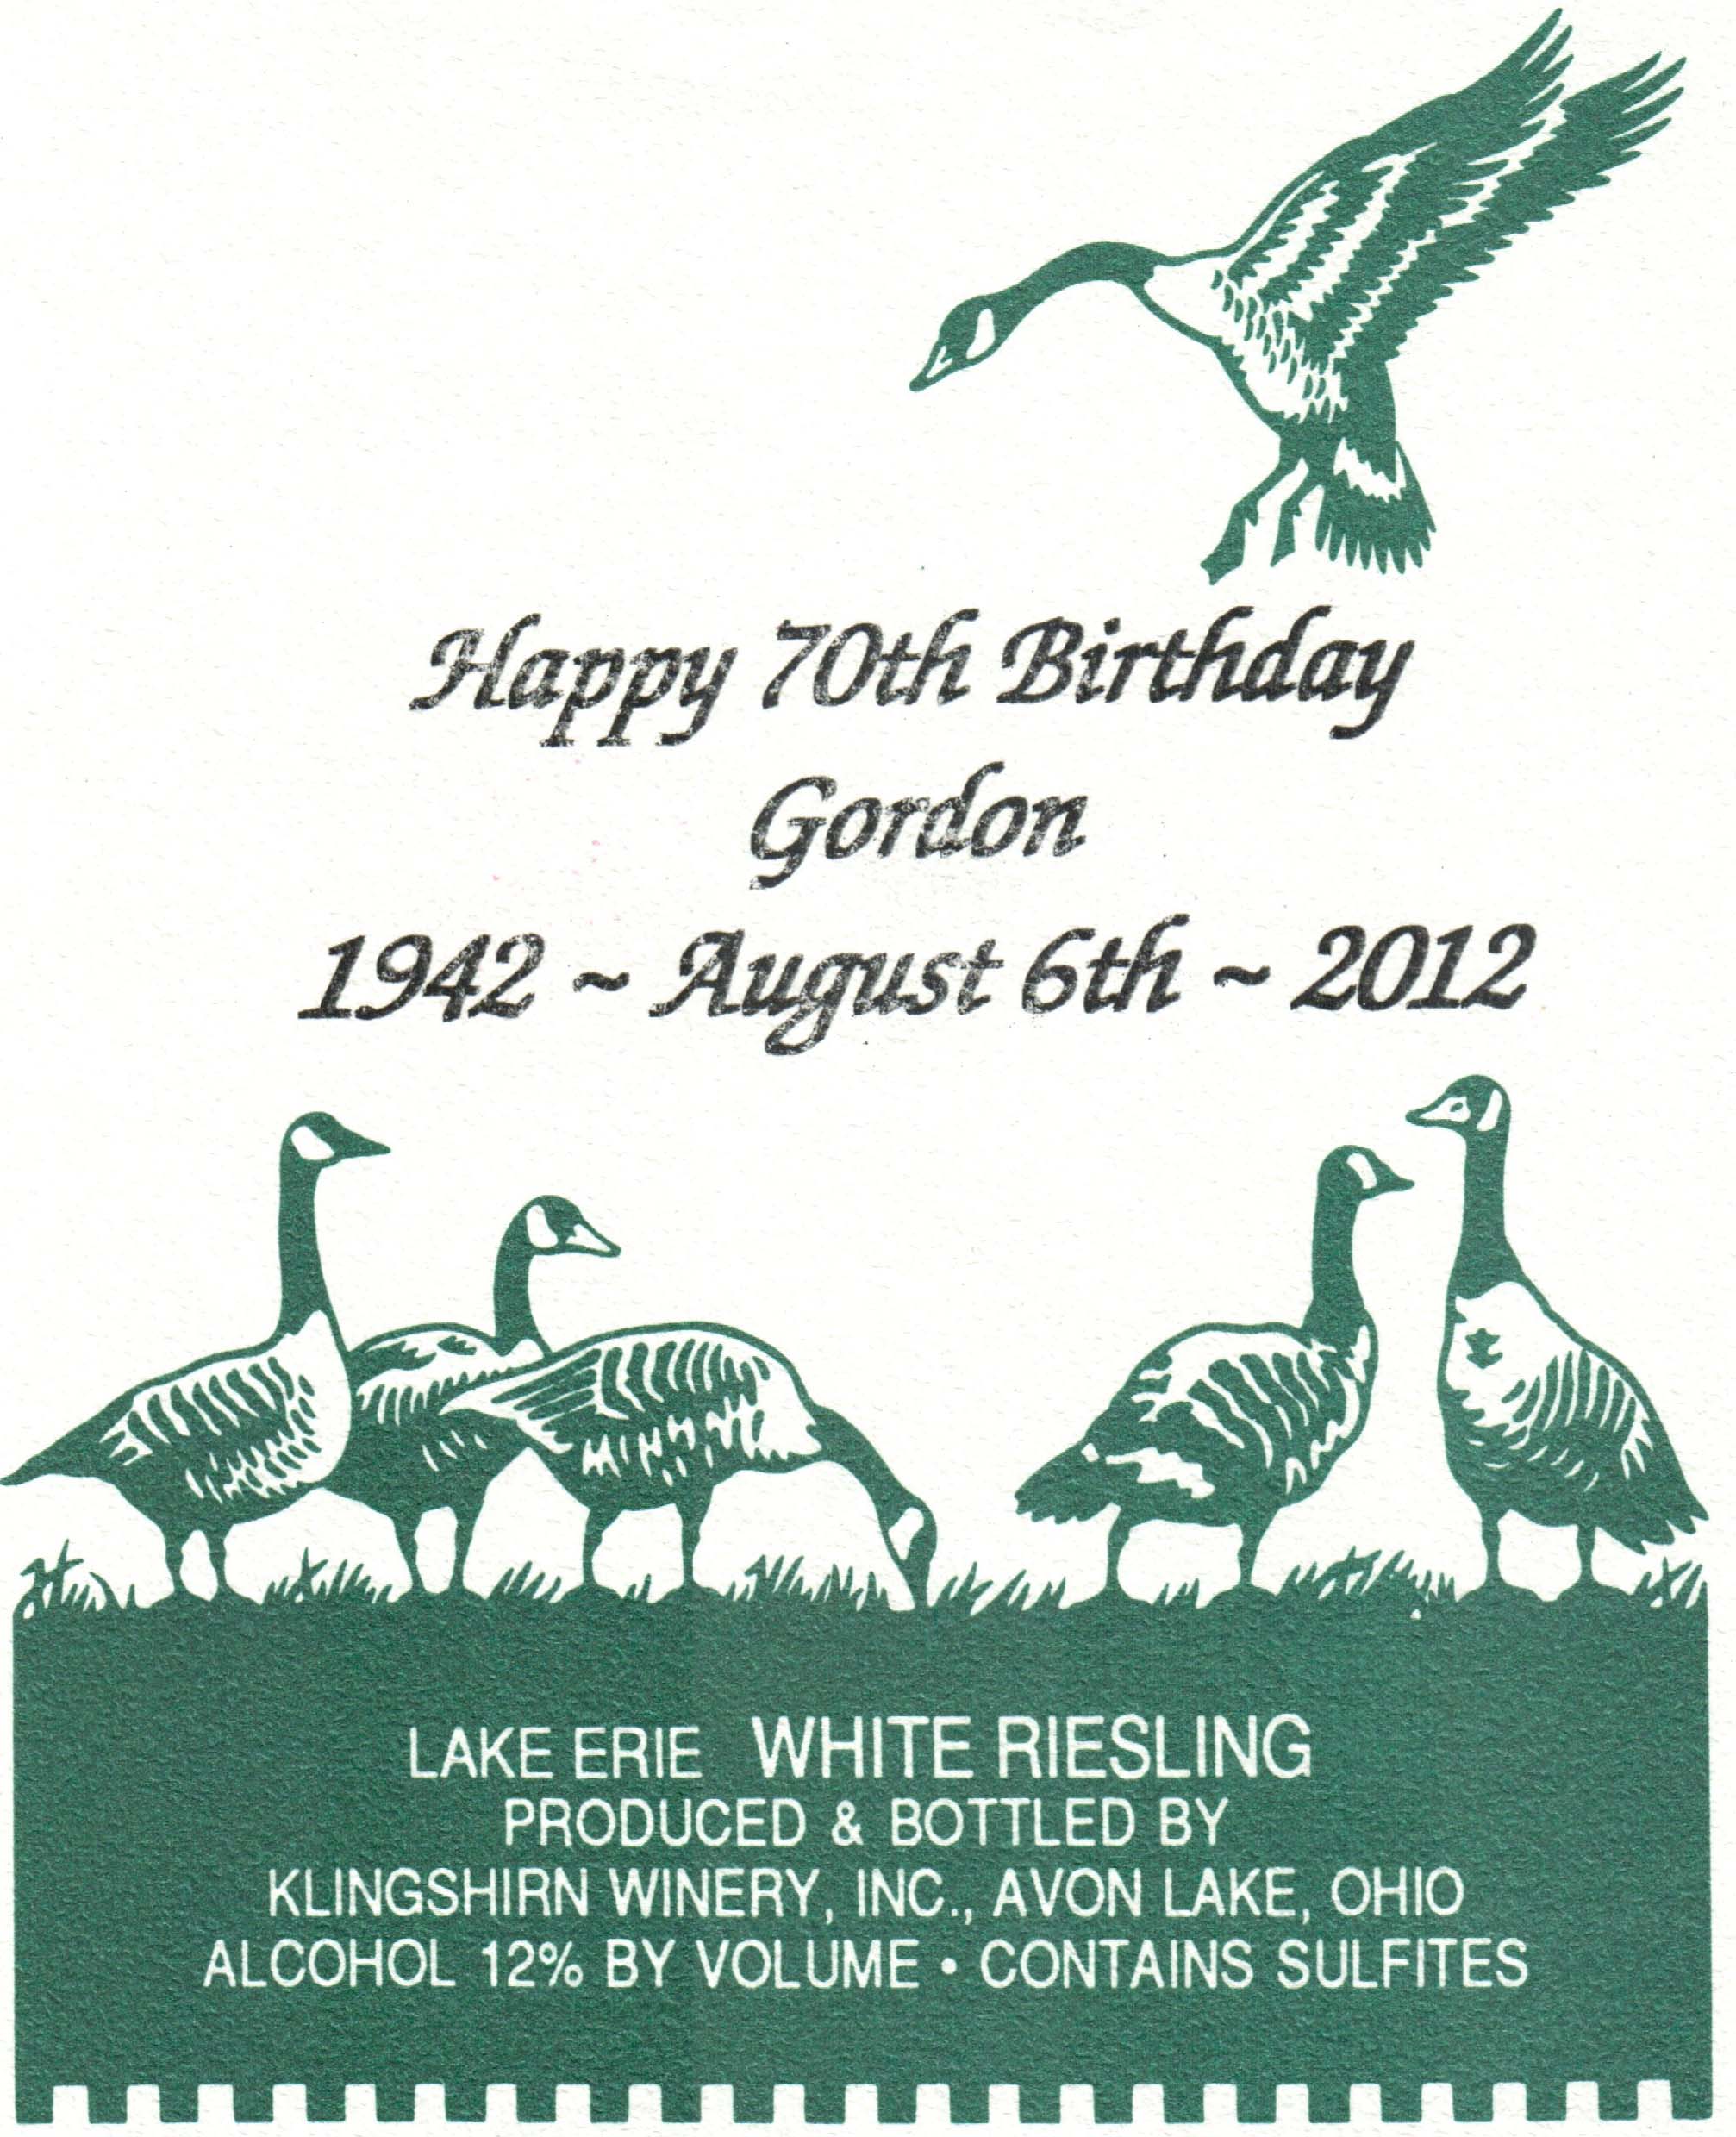 Geese design label